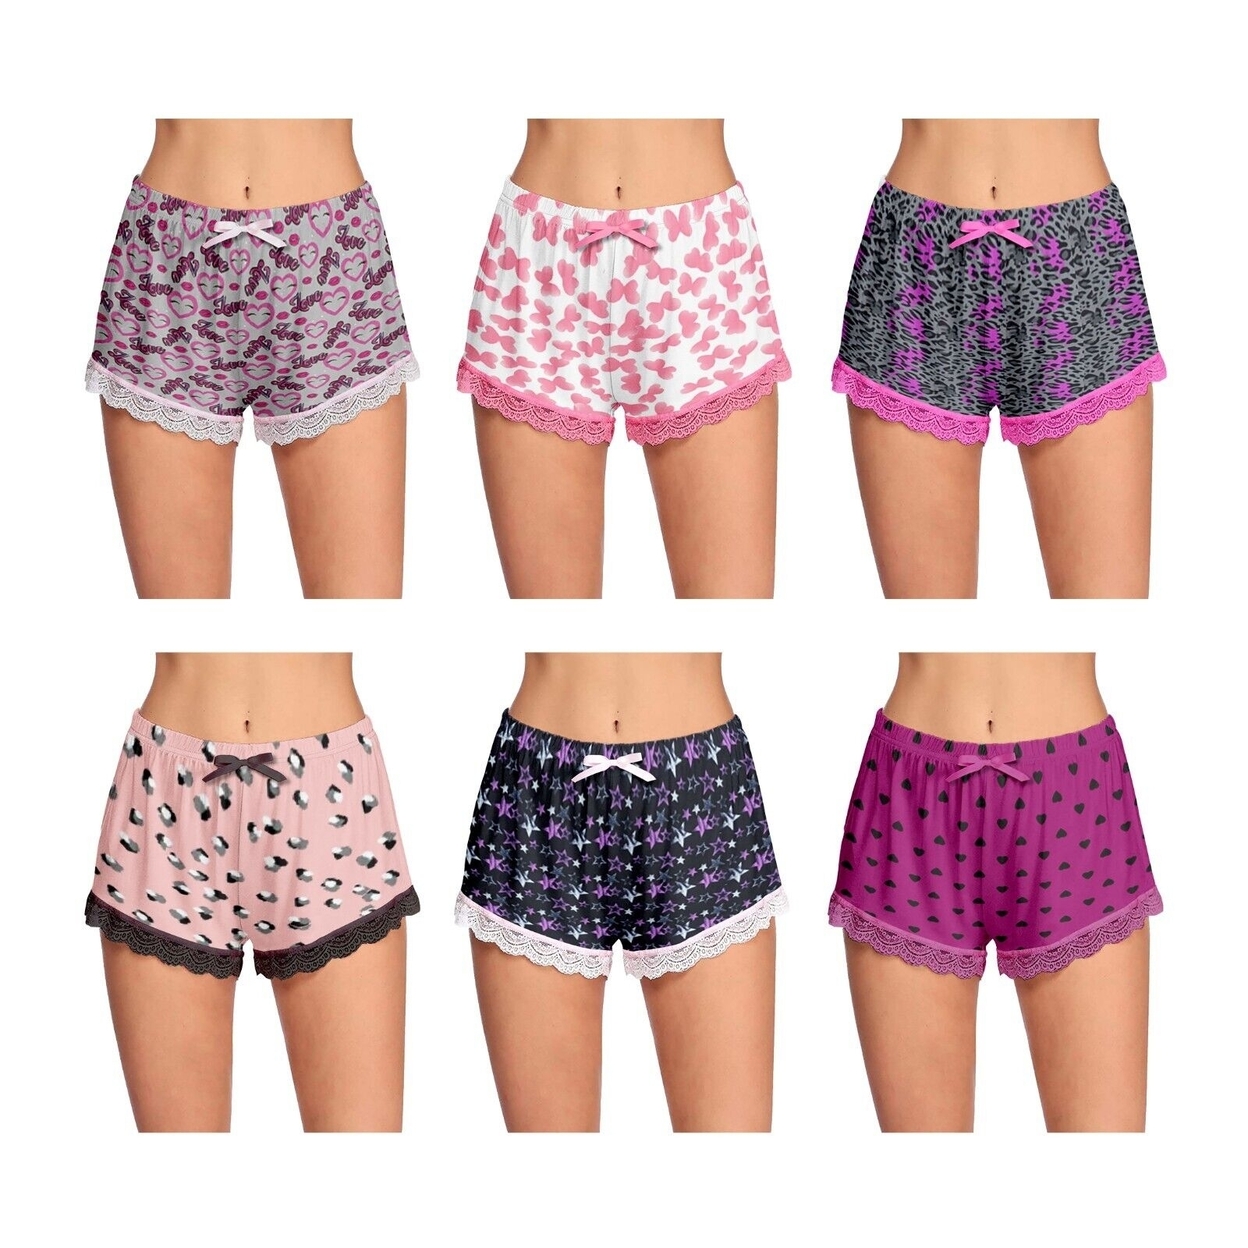 3-Pack: Women's Ultra-Soft Cozy Fun Printed Lace Trim Pajama Lounge Shorts - Large, Love